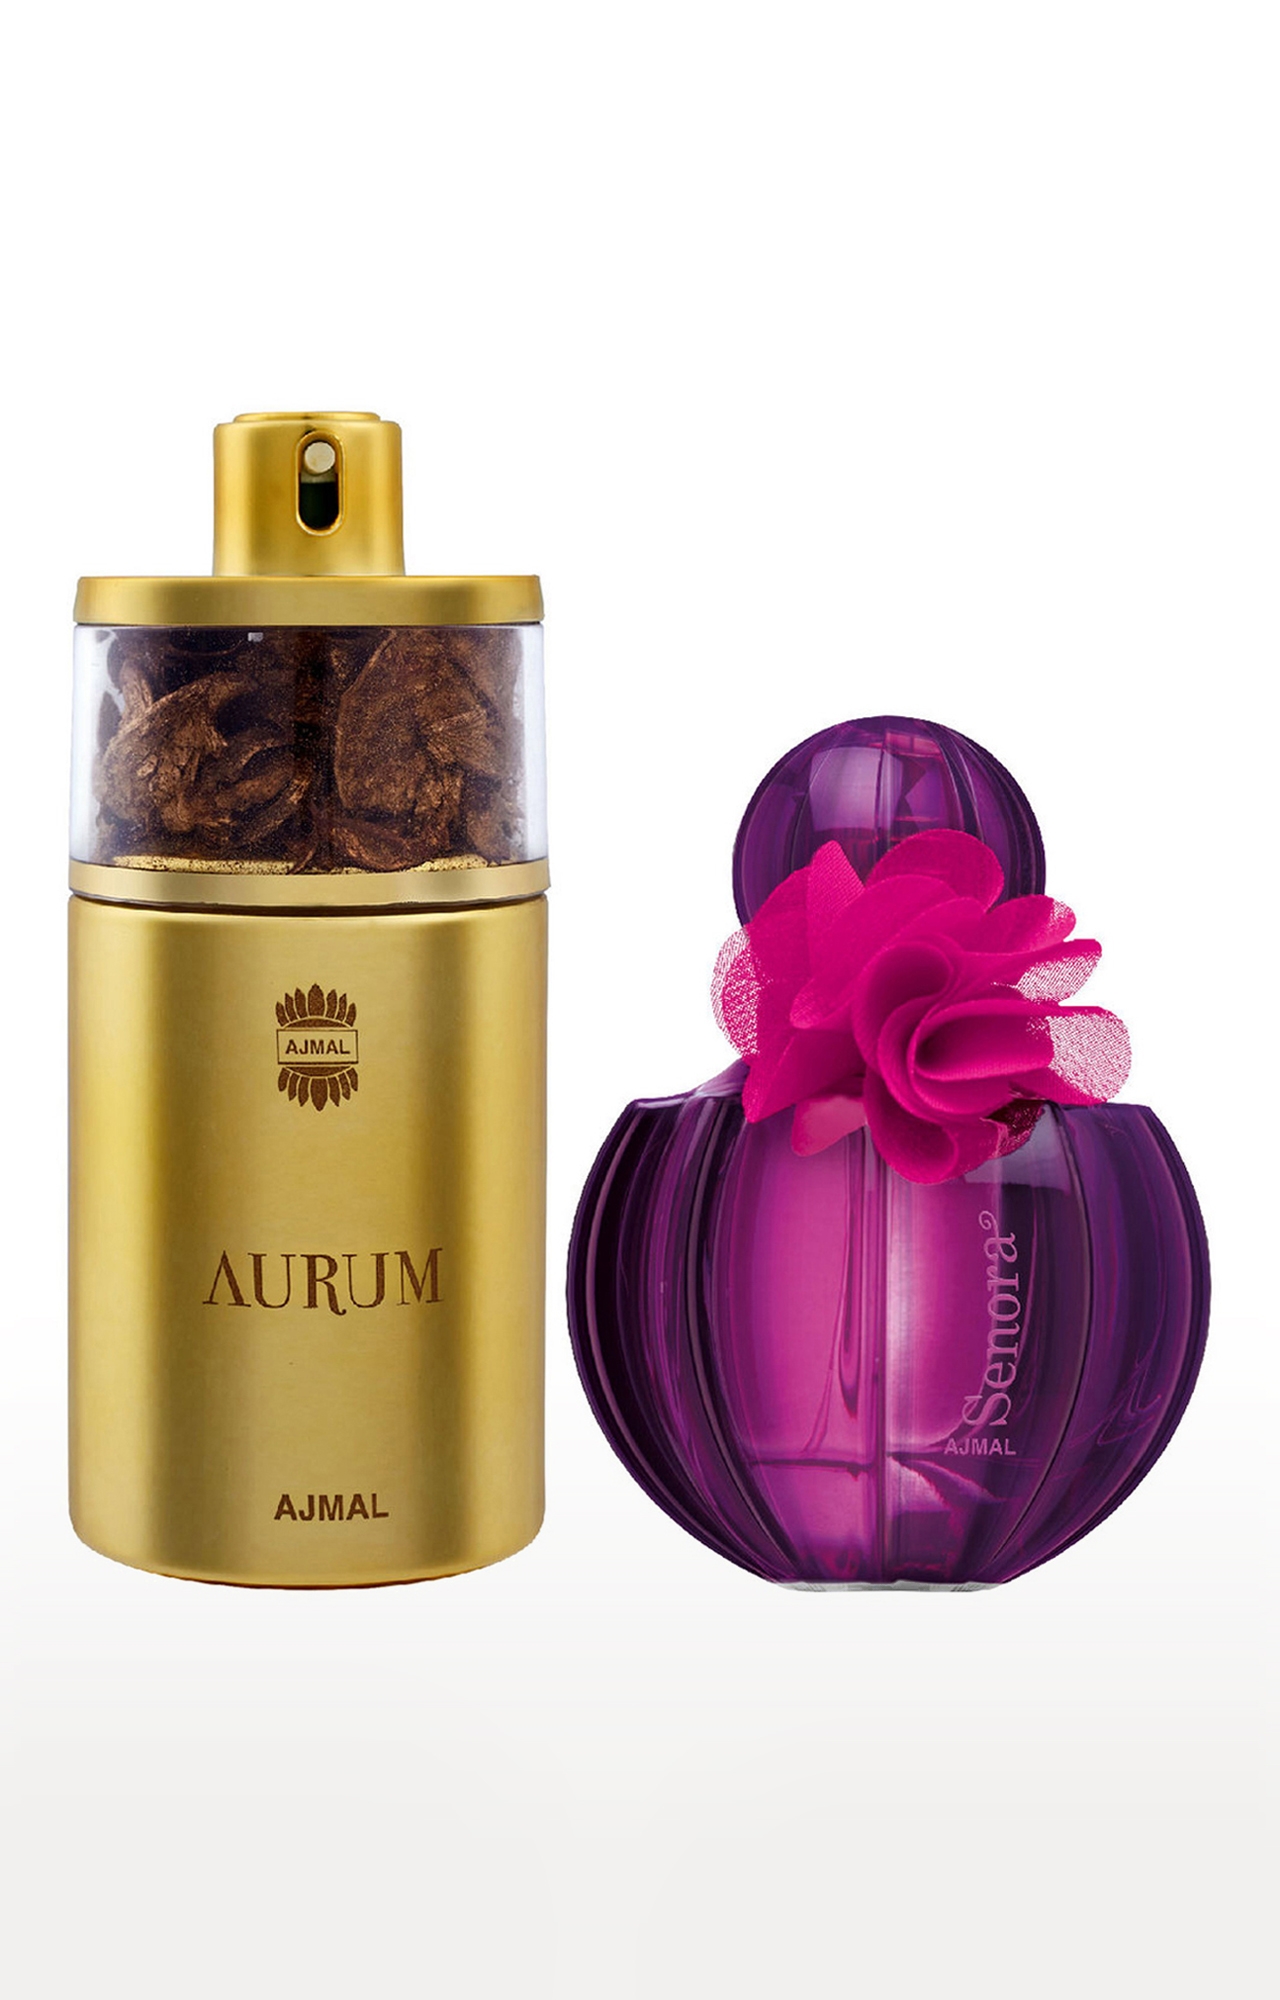 Ajmal Aurum EDP Fruity Perfume 75ml for Women and Senora EDP Perfume 75ml for Women